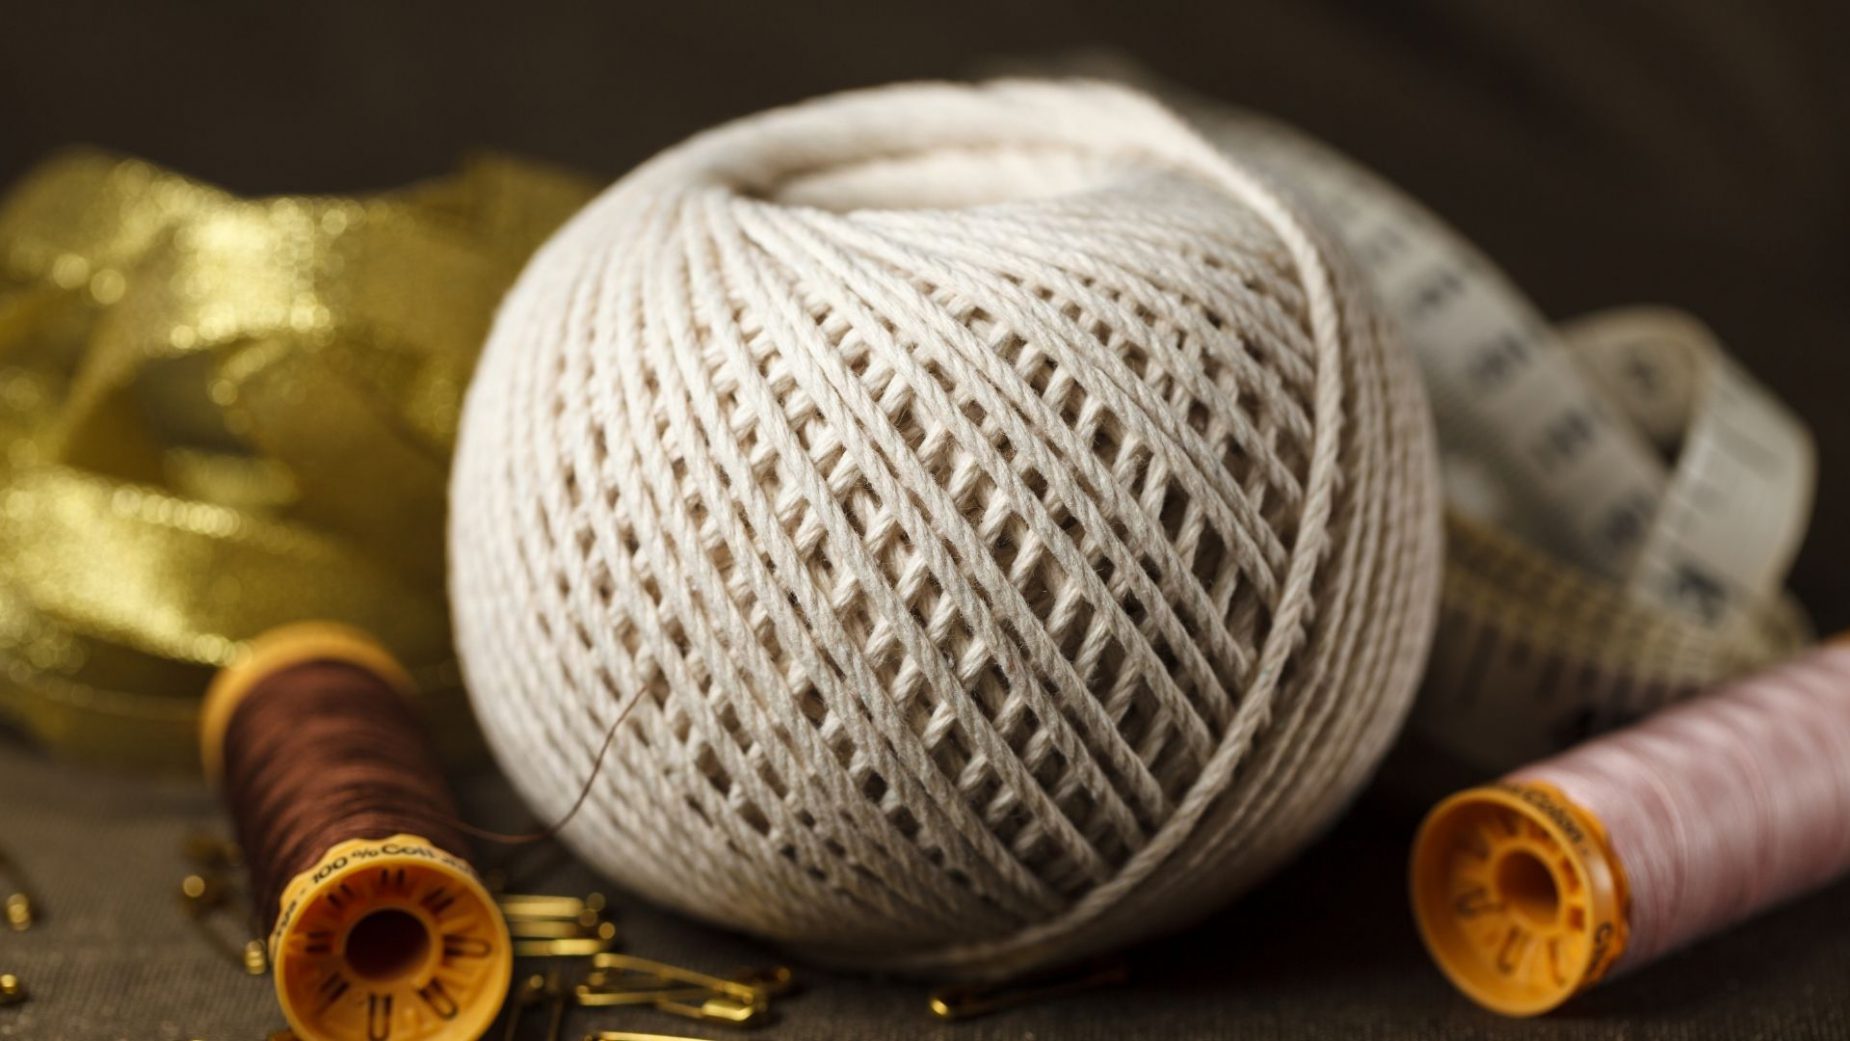 Yarn, Fiber And Thread Market